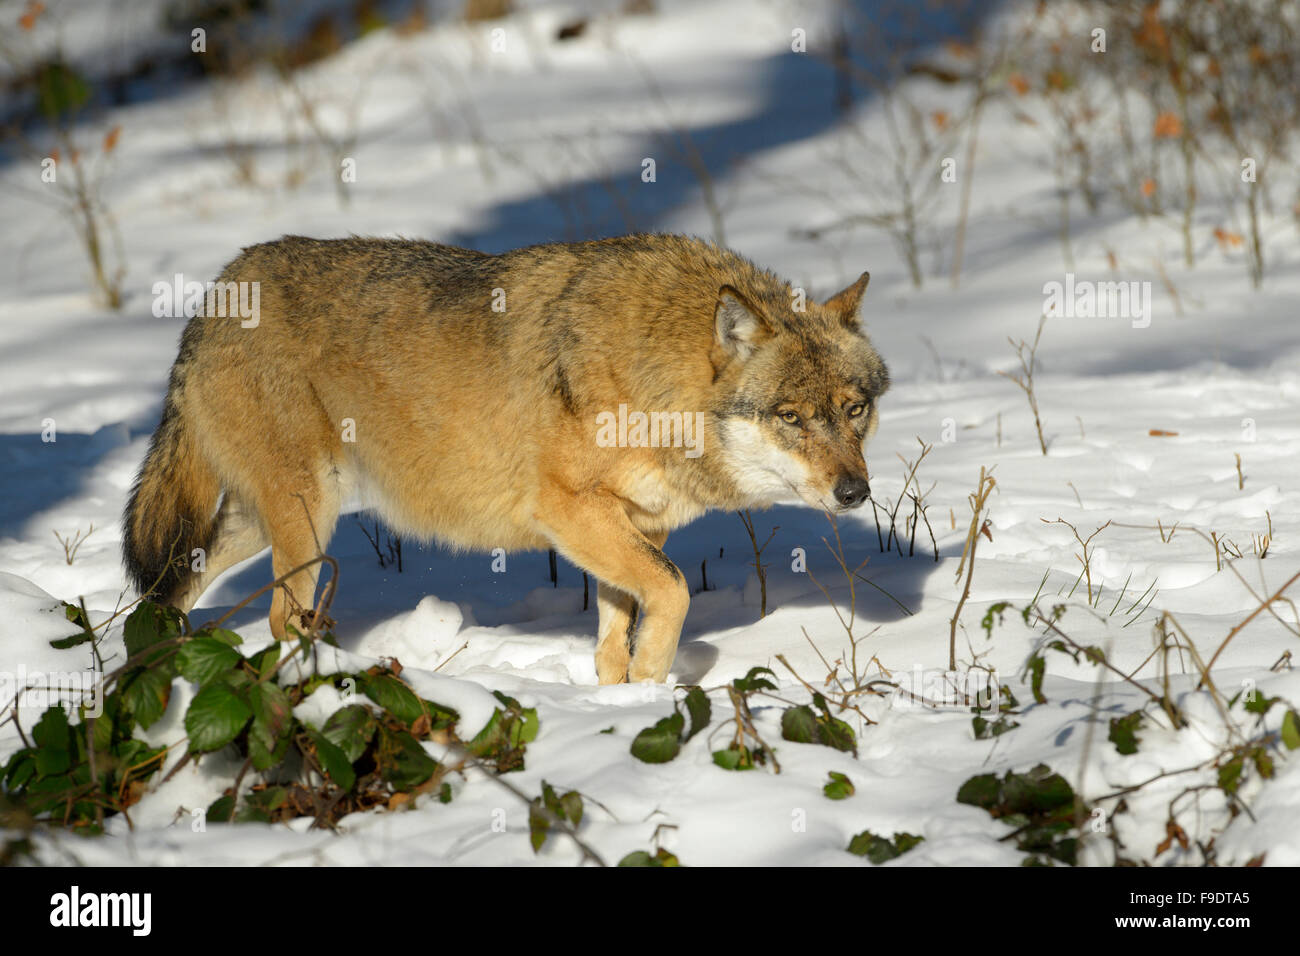 Eurasienne adultes wolf (Canis lupus lupus) marcher en forêt dans la neige, looking at camera, Bayerische Wald, Allemagne Banque D'Images